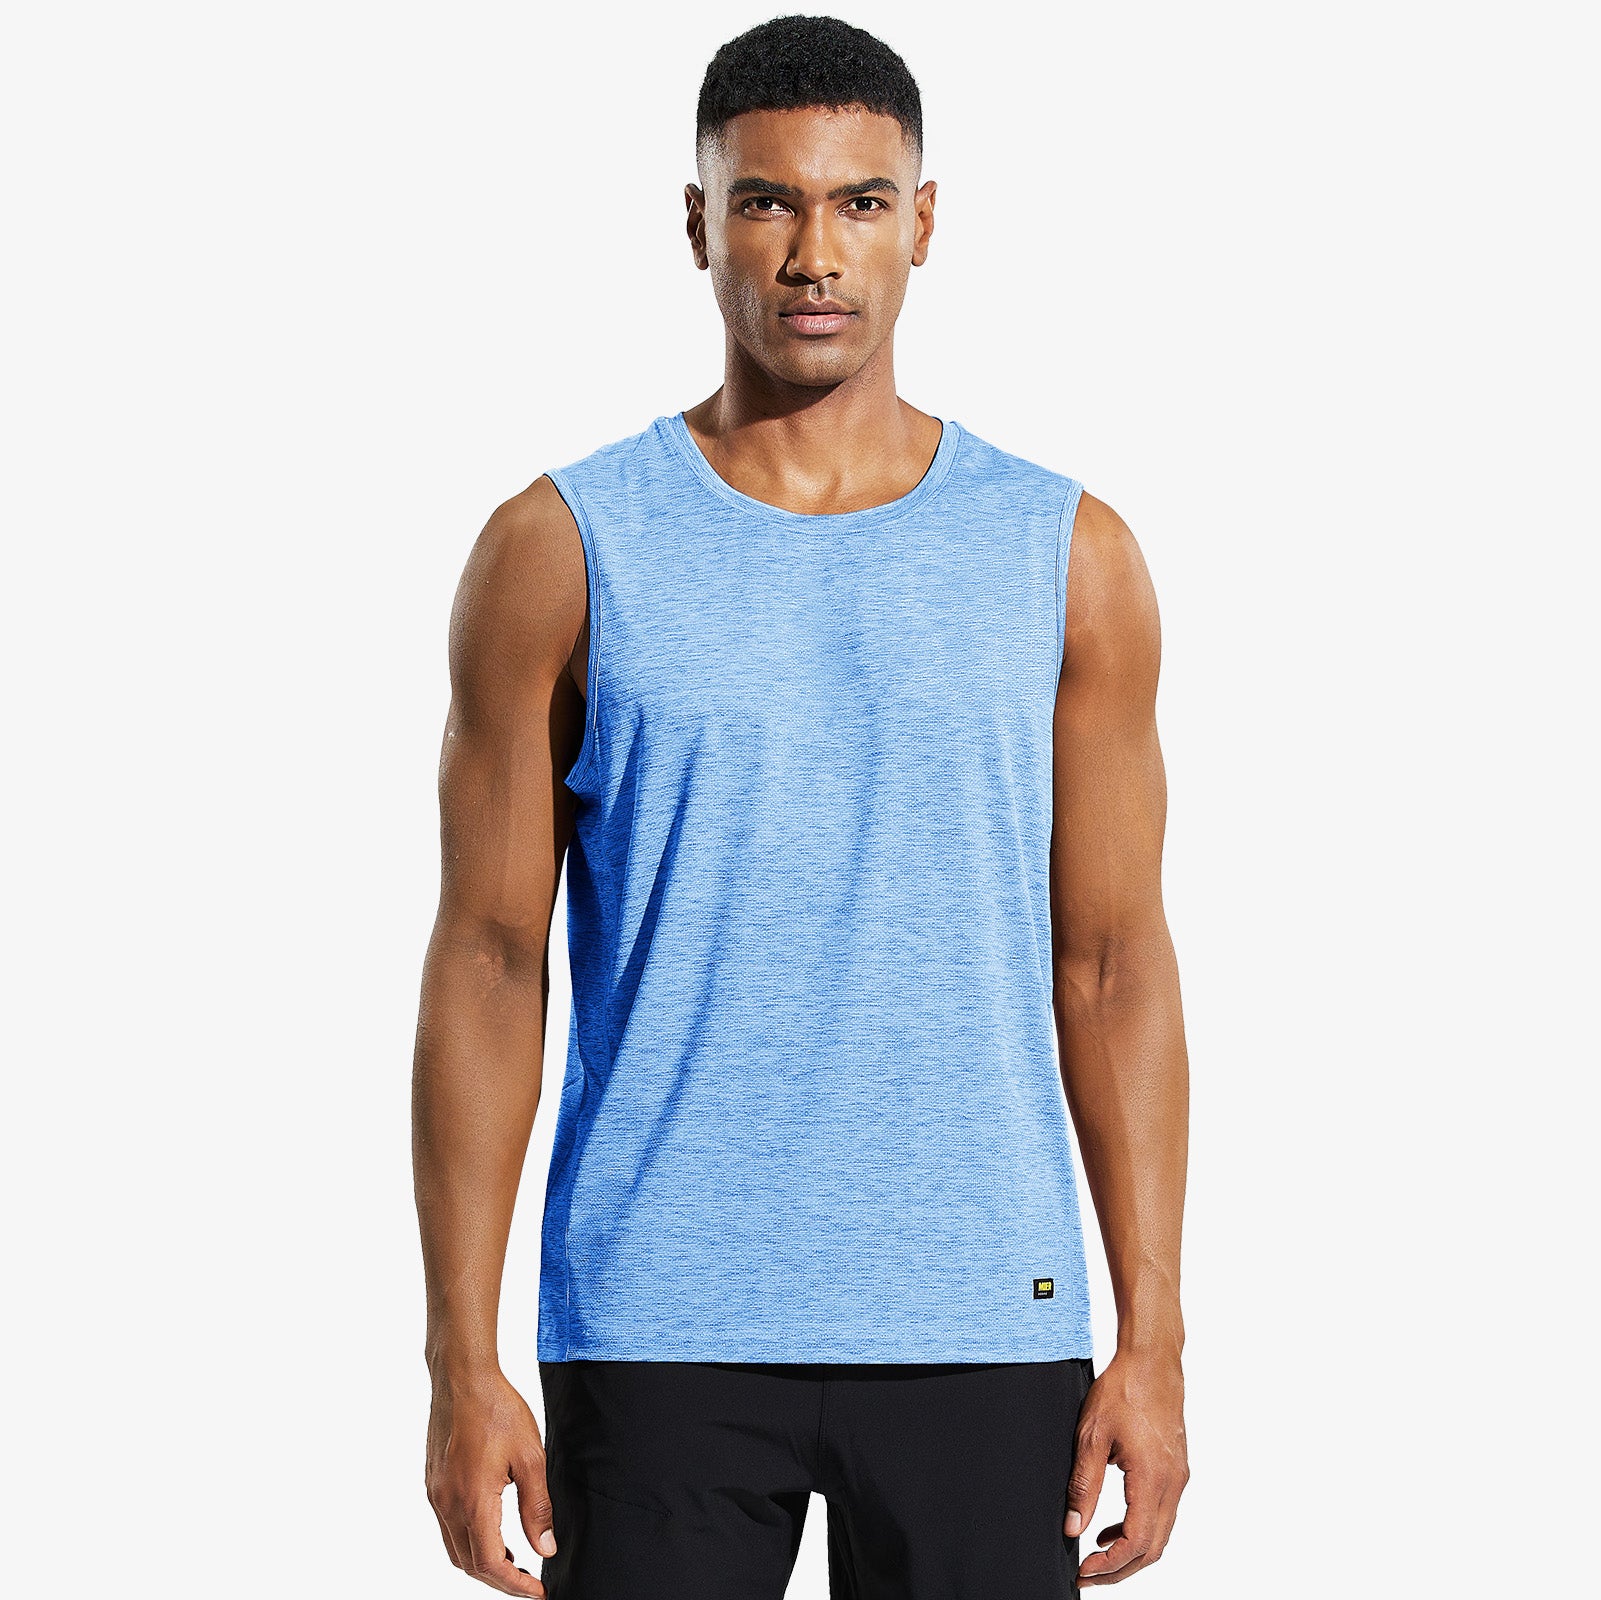 Men’s Sleeveless Tank Top Dry Fit Workout Tee Shirt